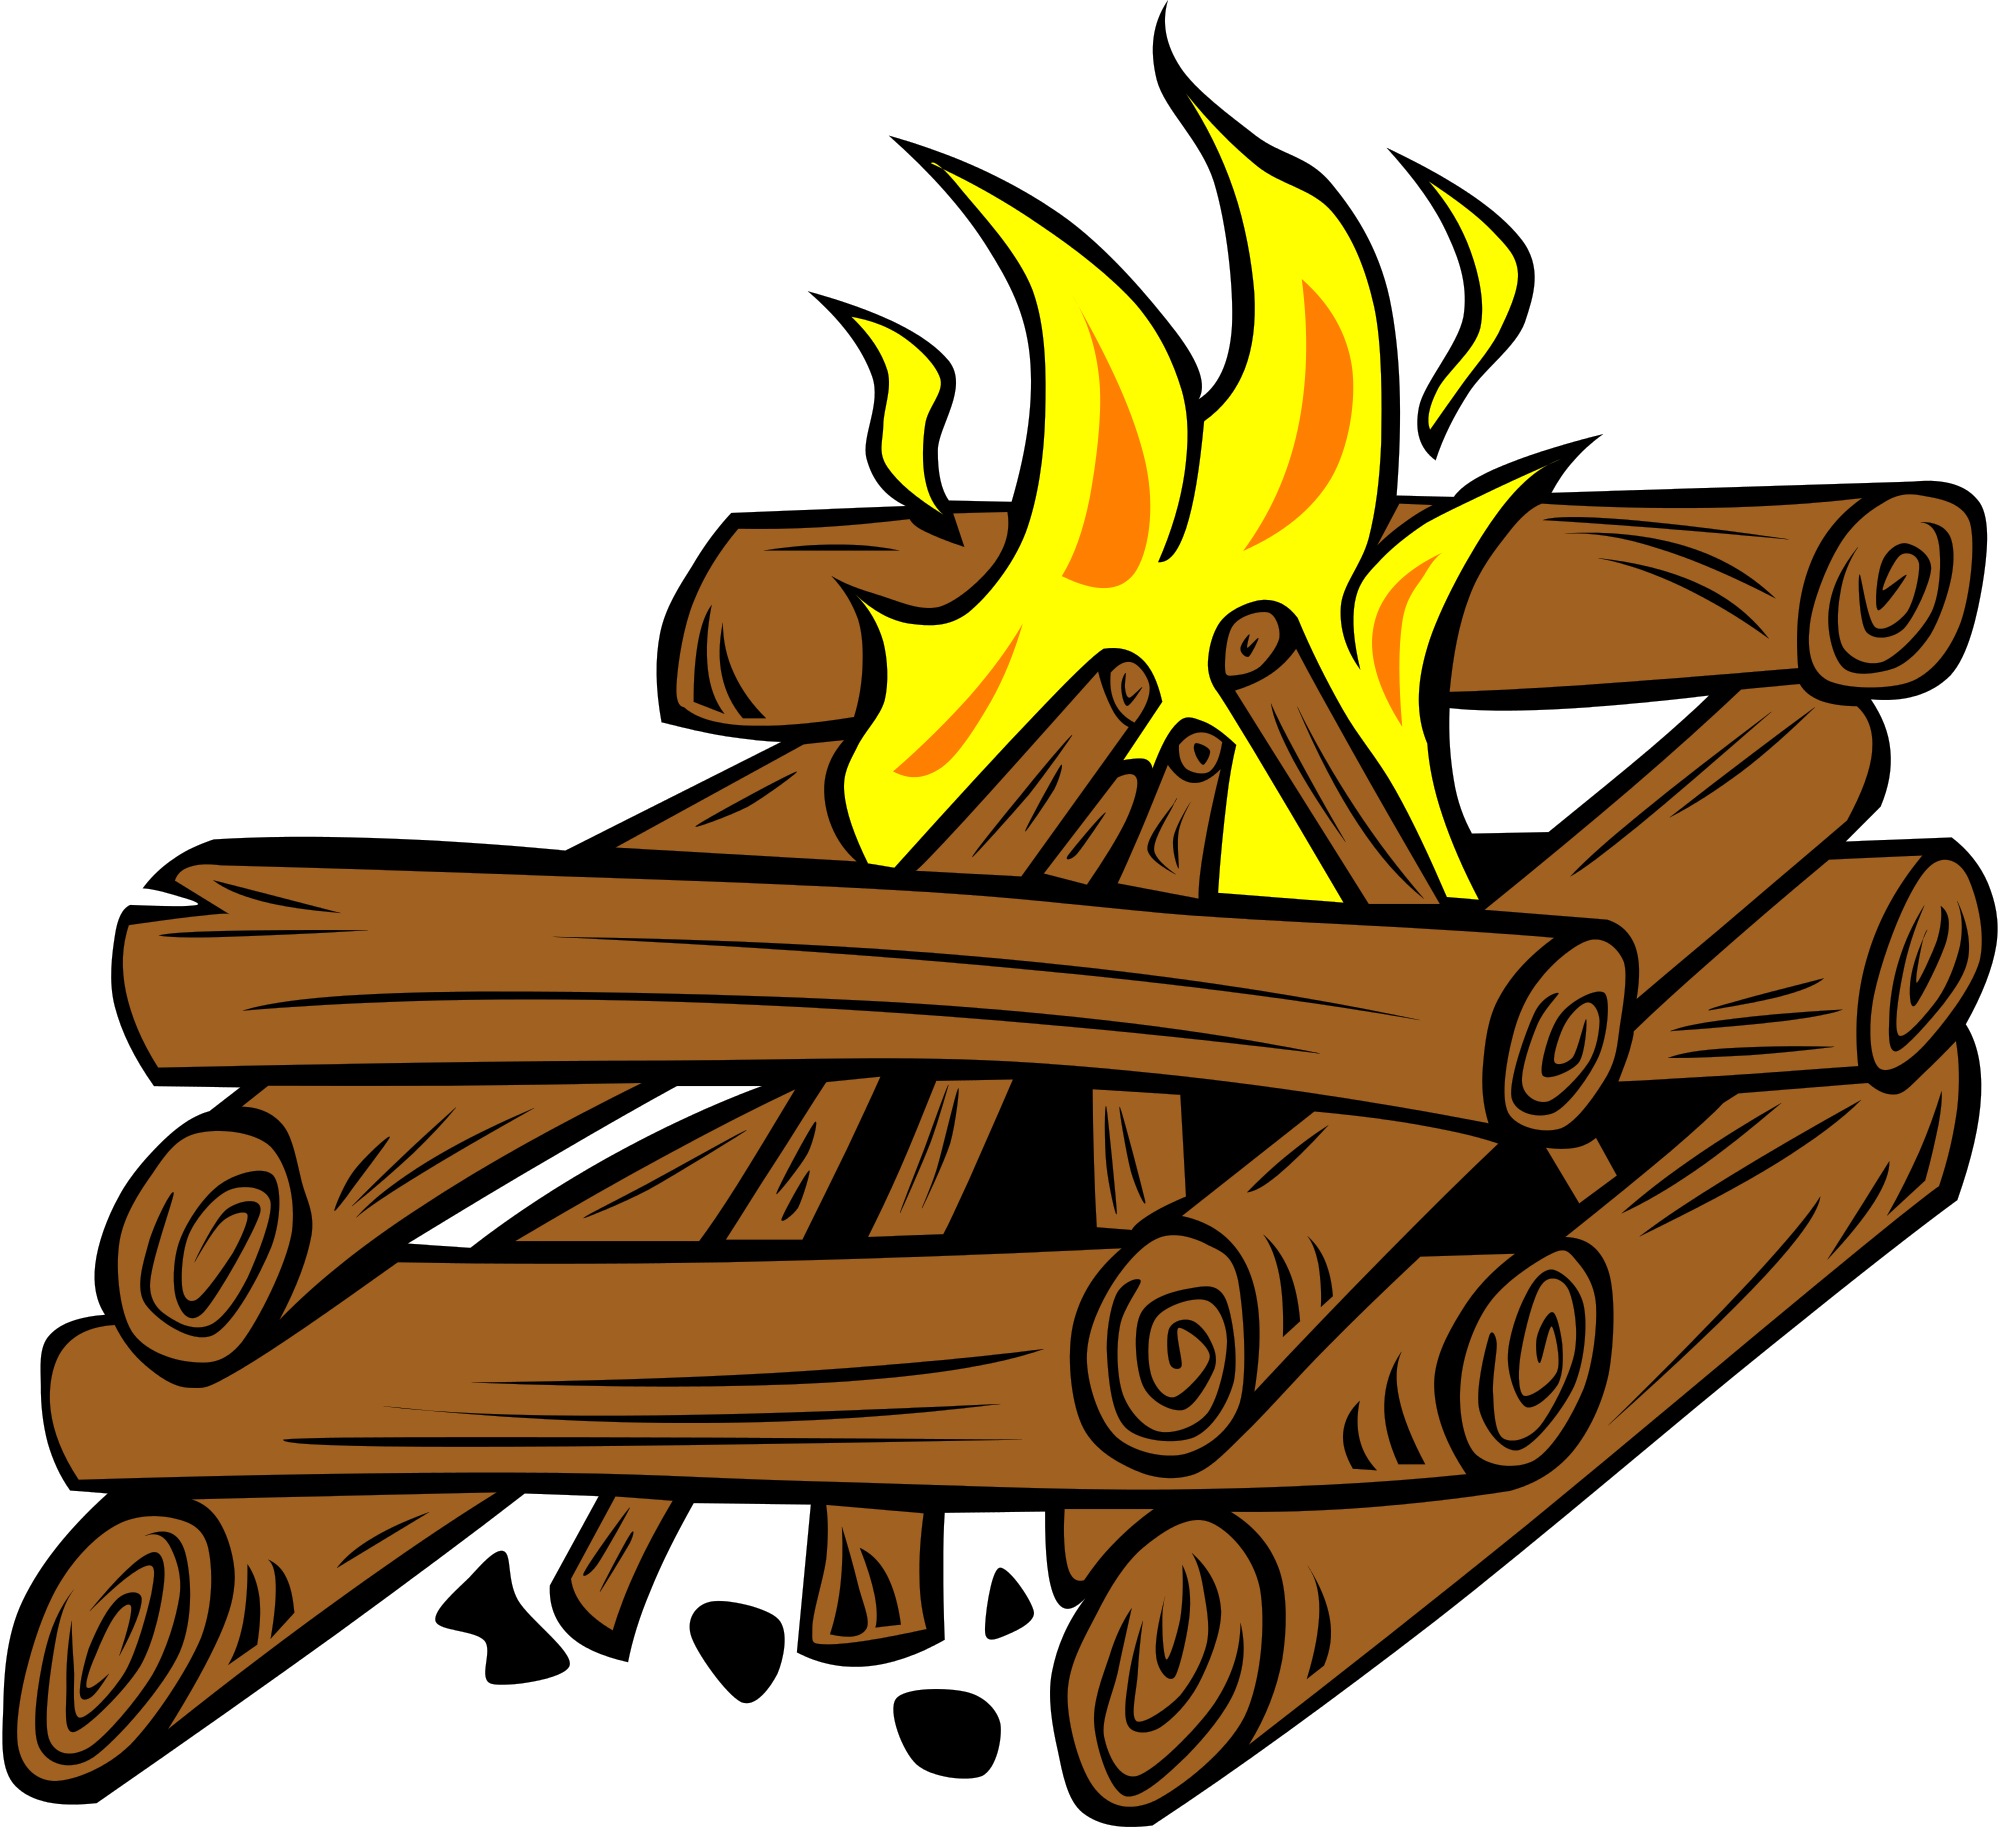 Campfire - Wikipedia, the free encyclopedia